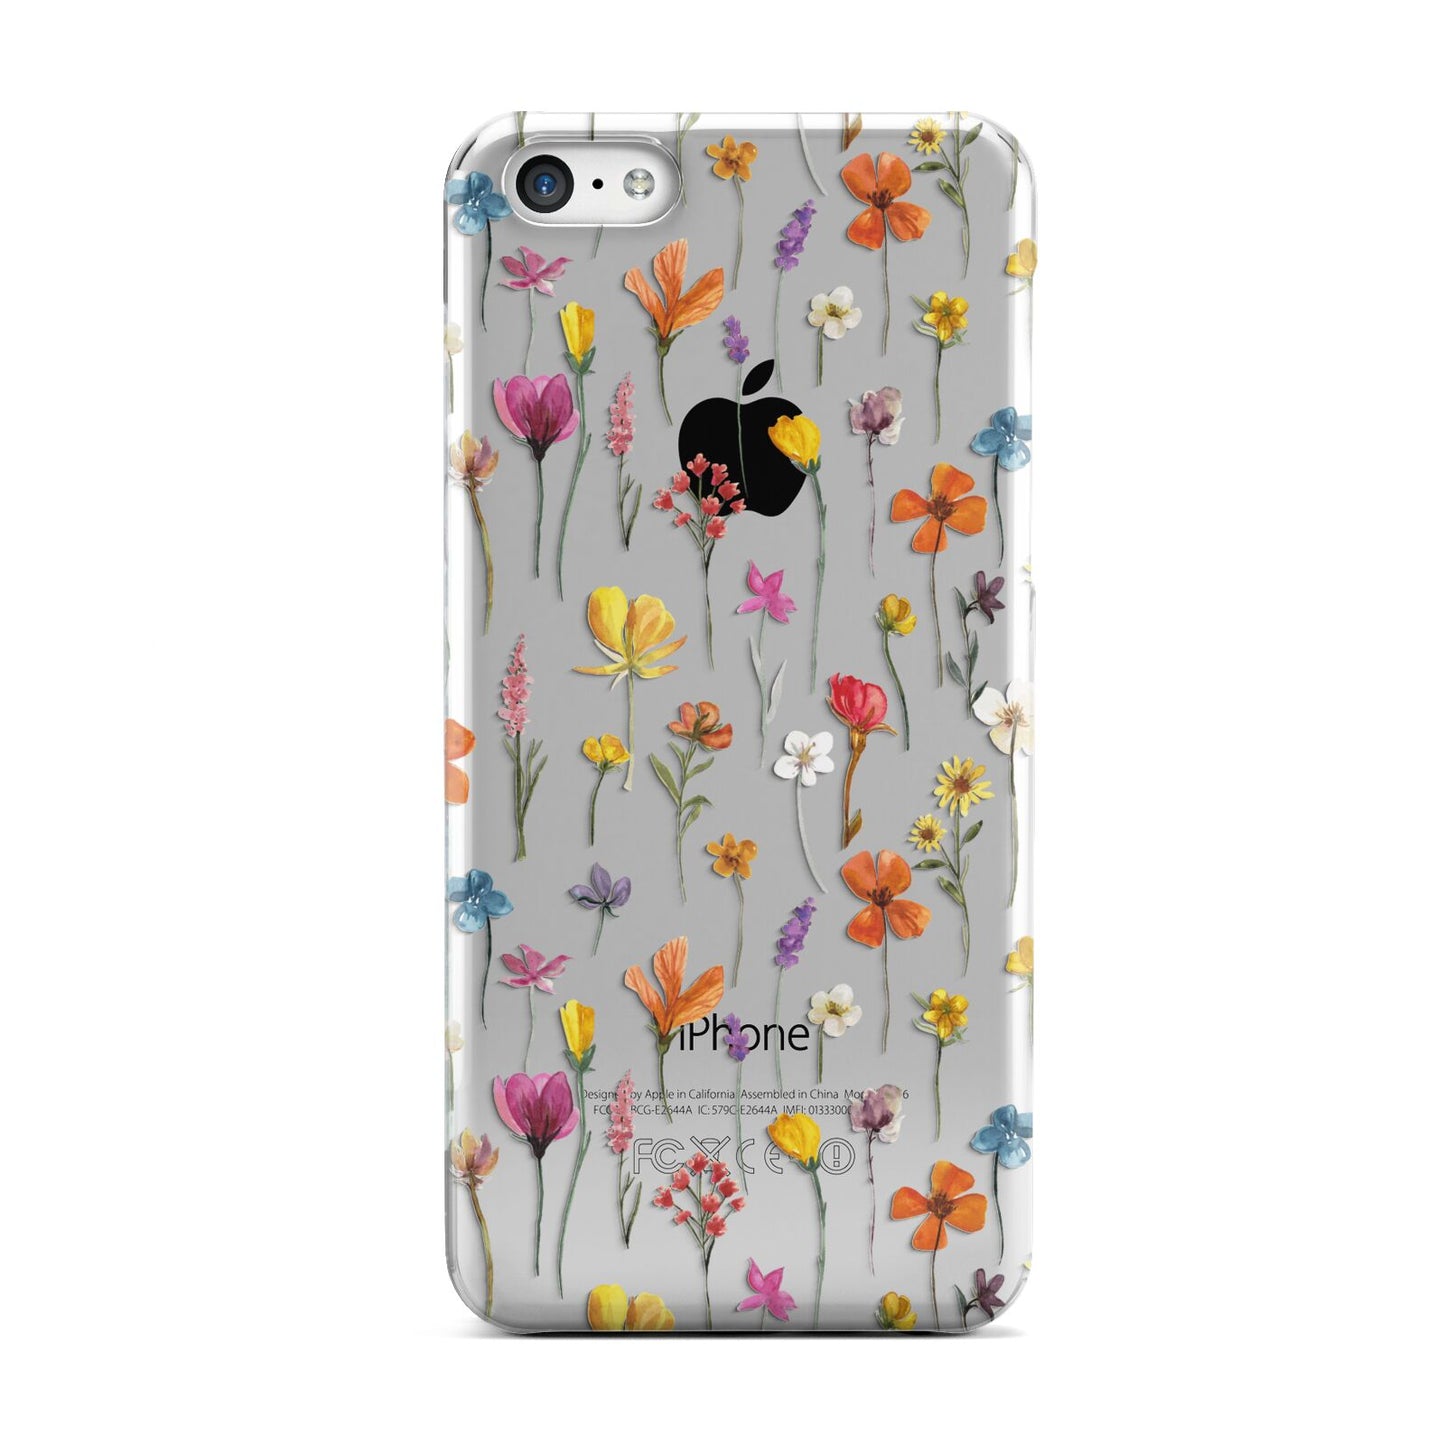 Botanical Floral Apple iPhone 5c Case